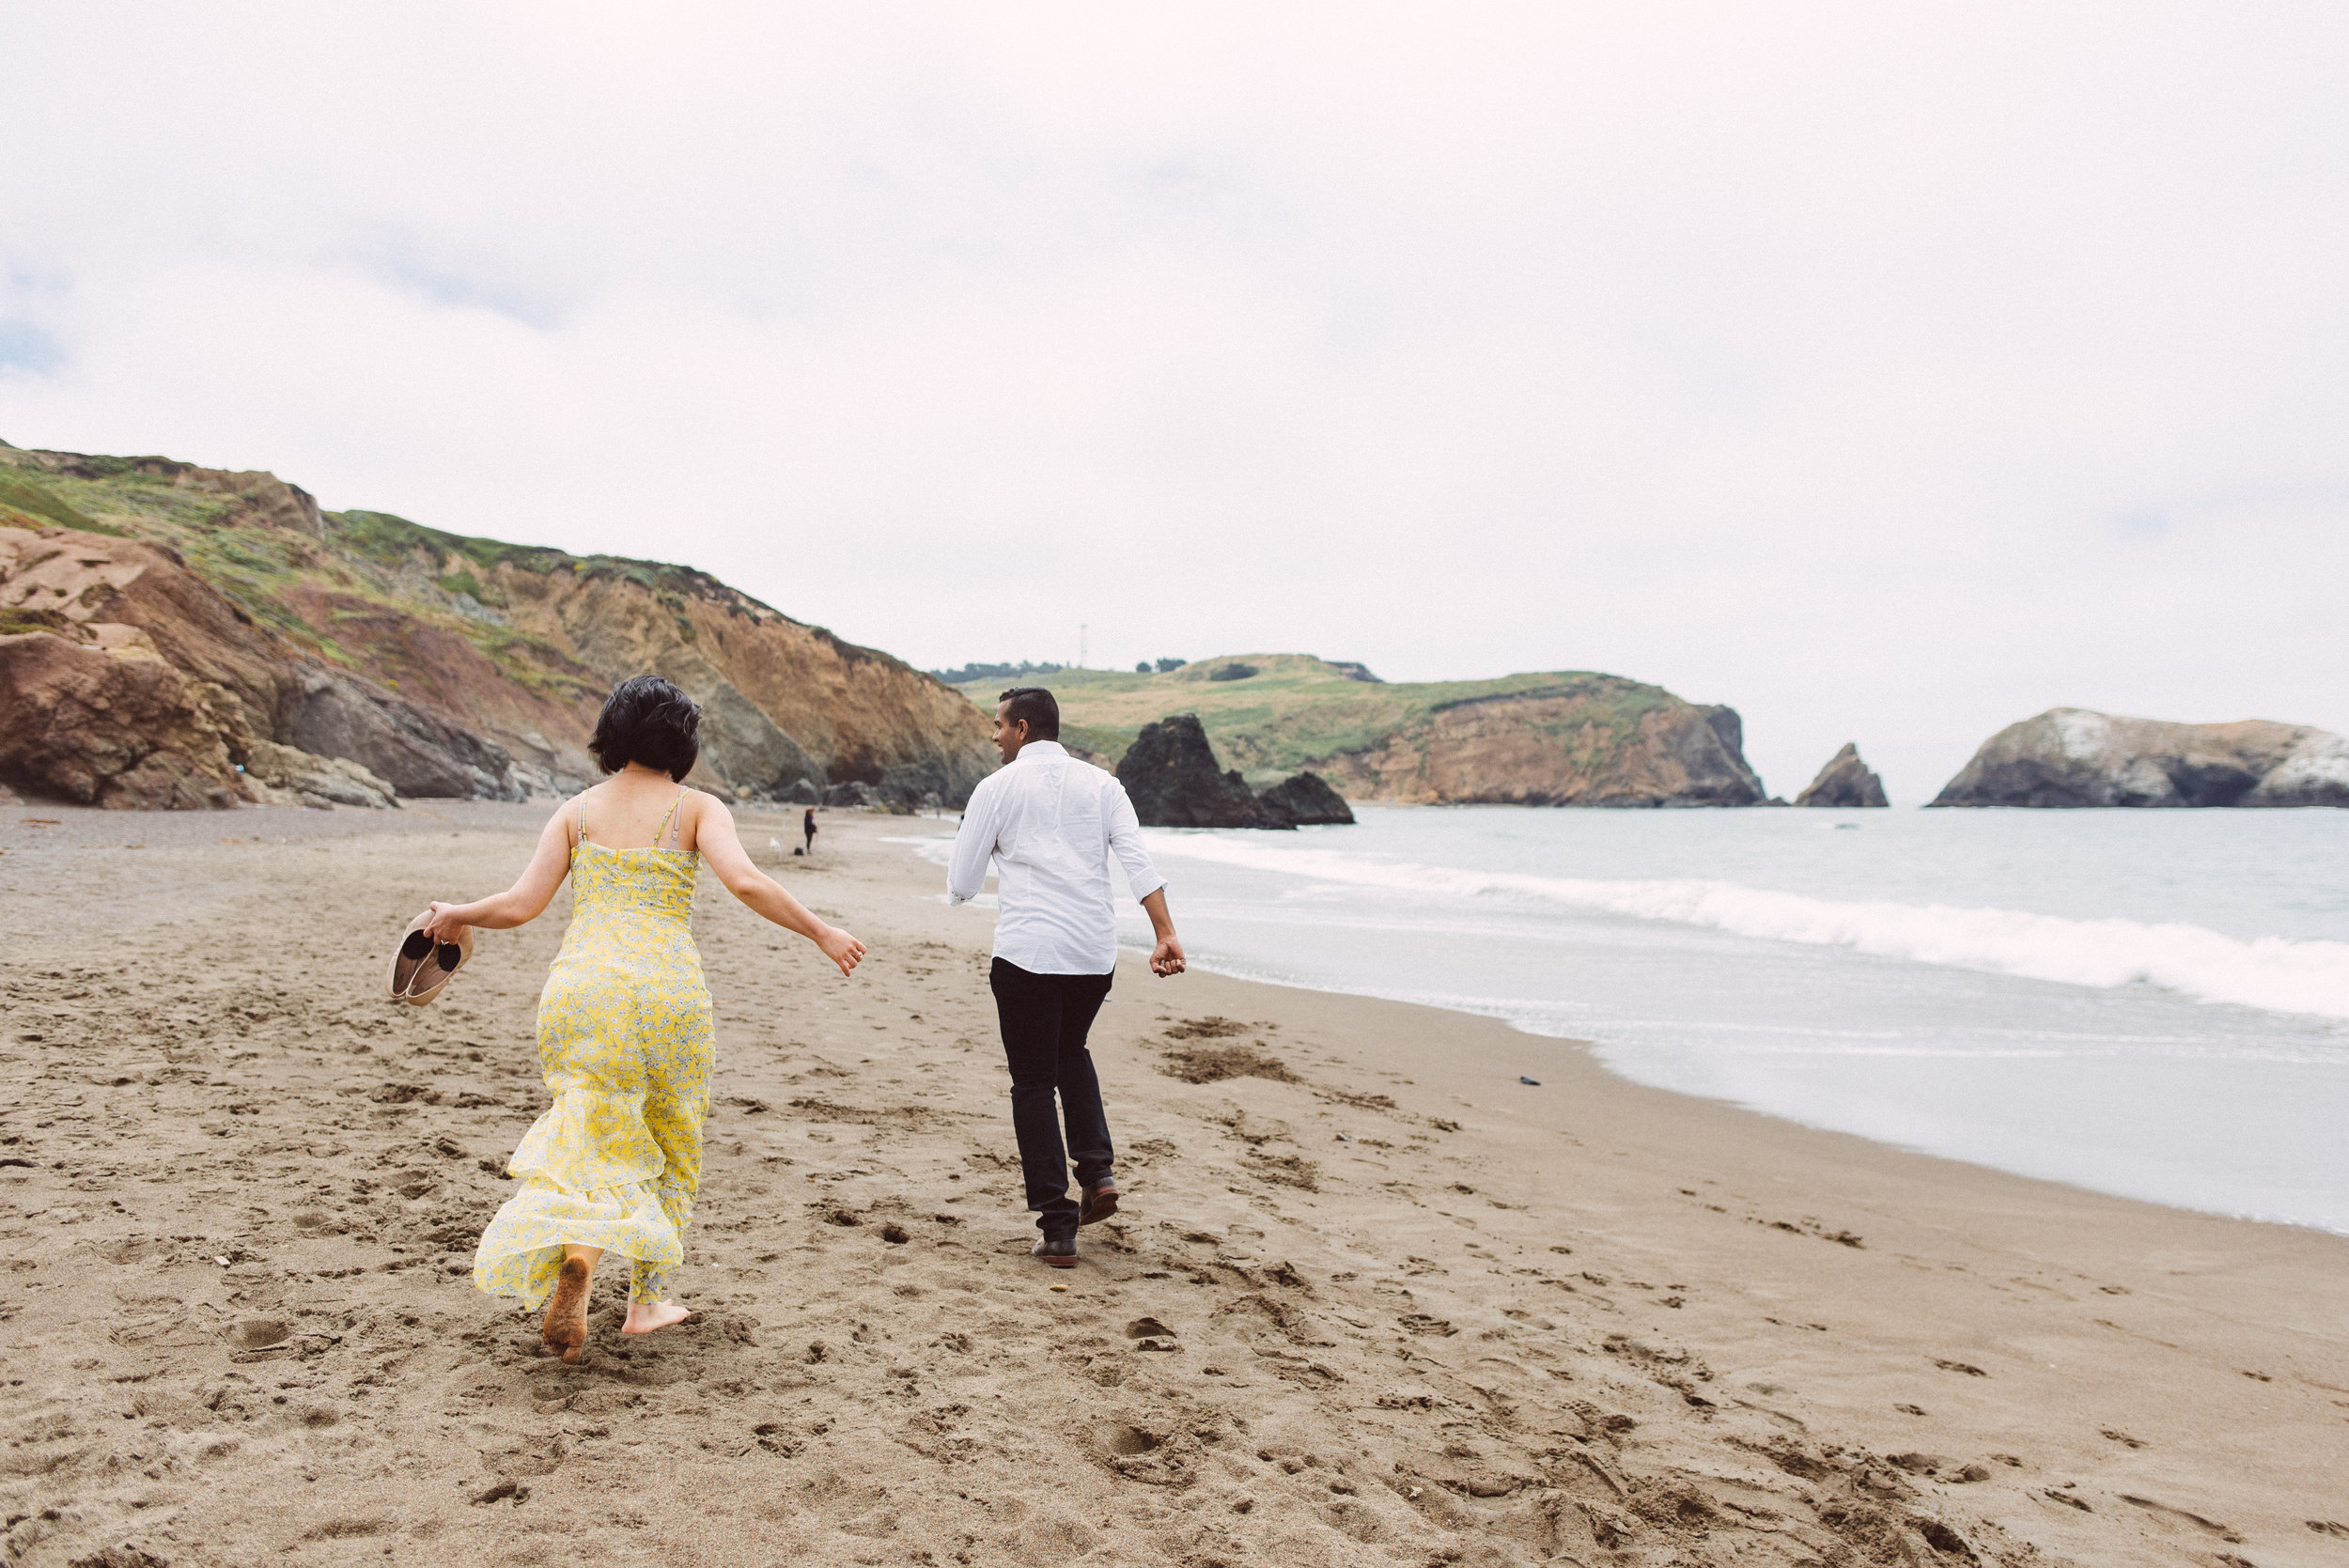 San Francisco Couple and Wedding Photographer